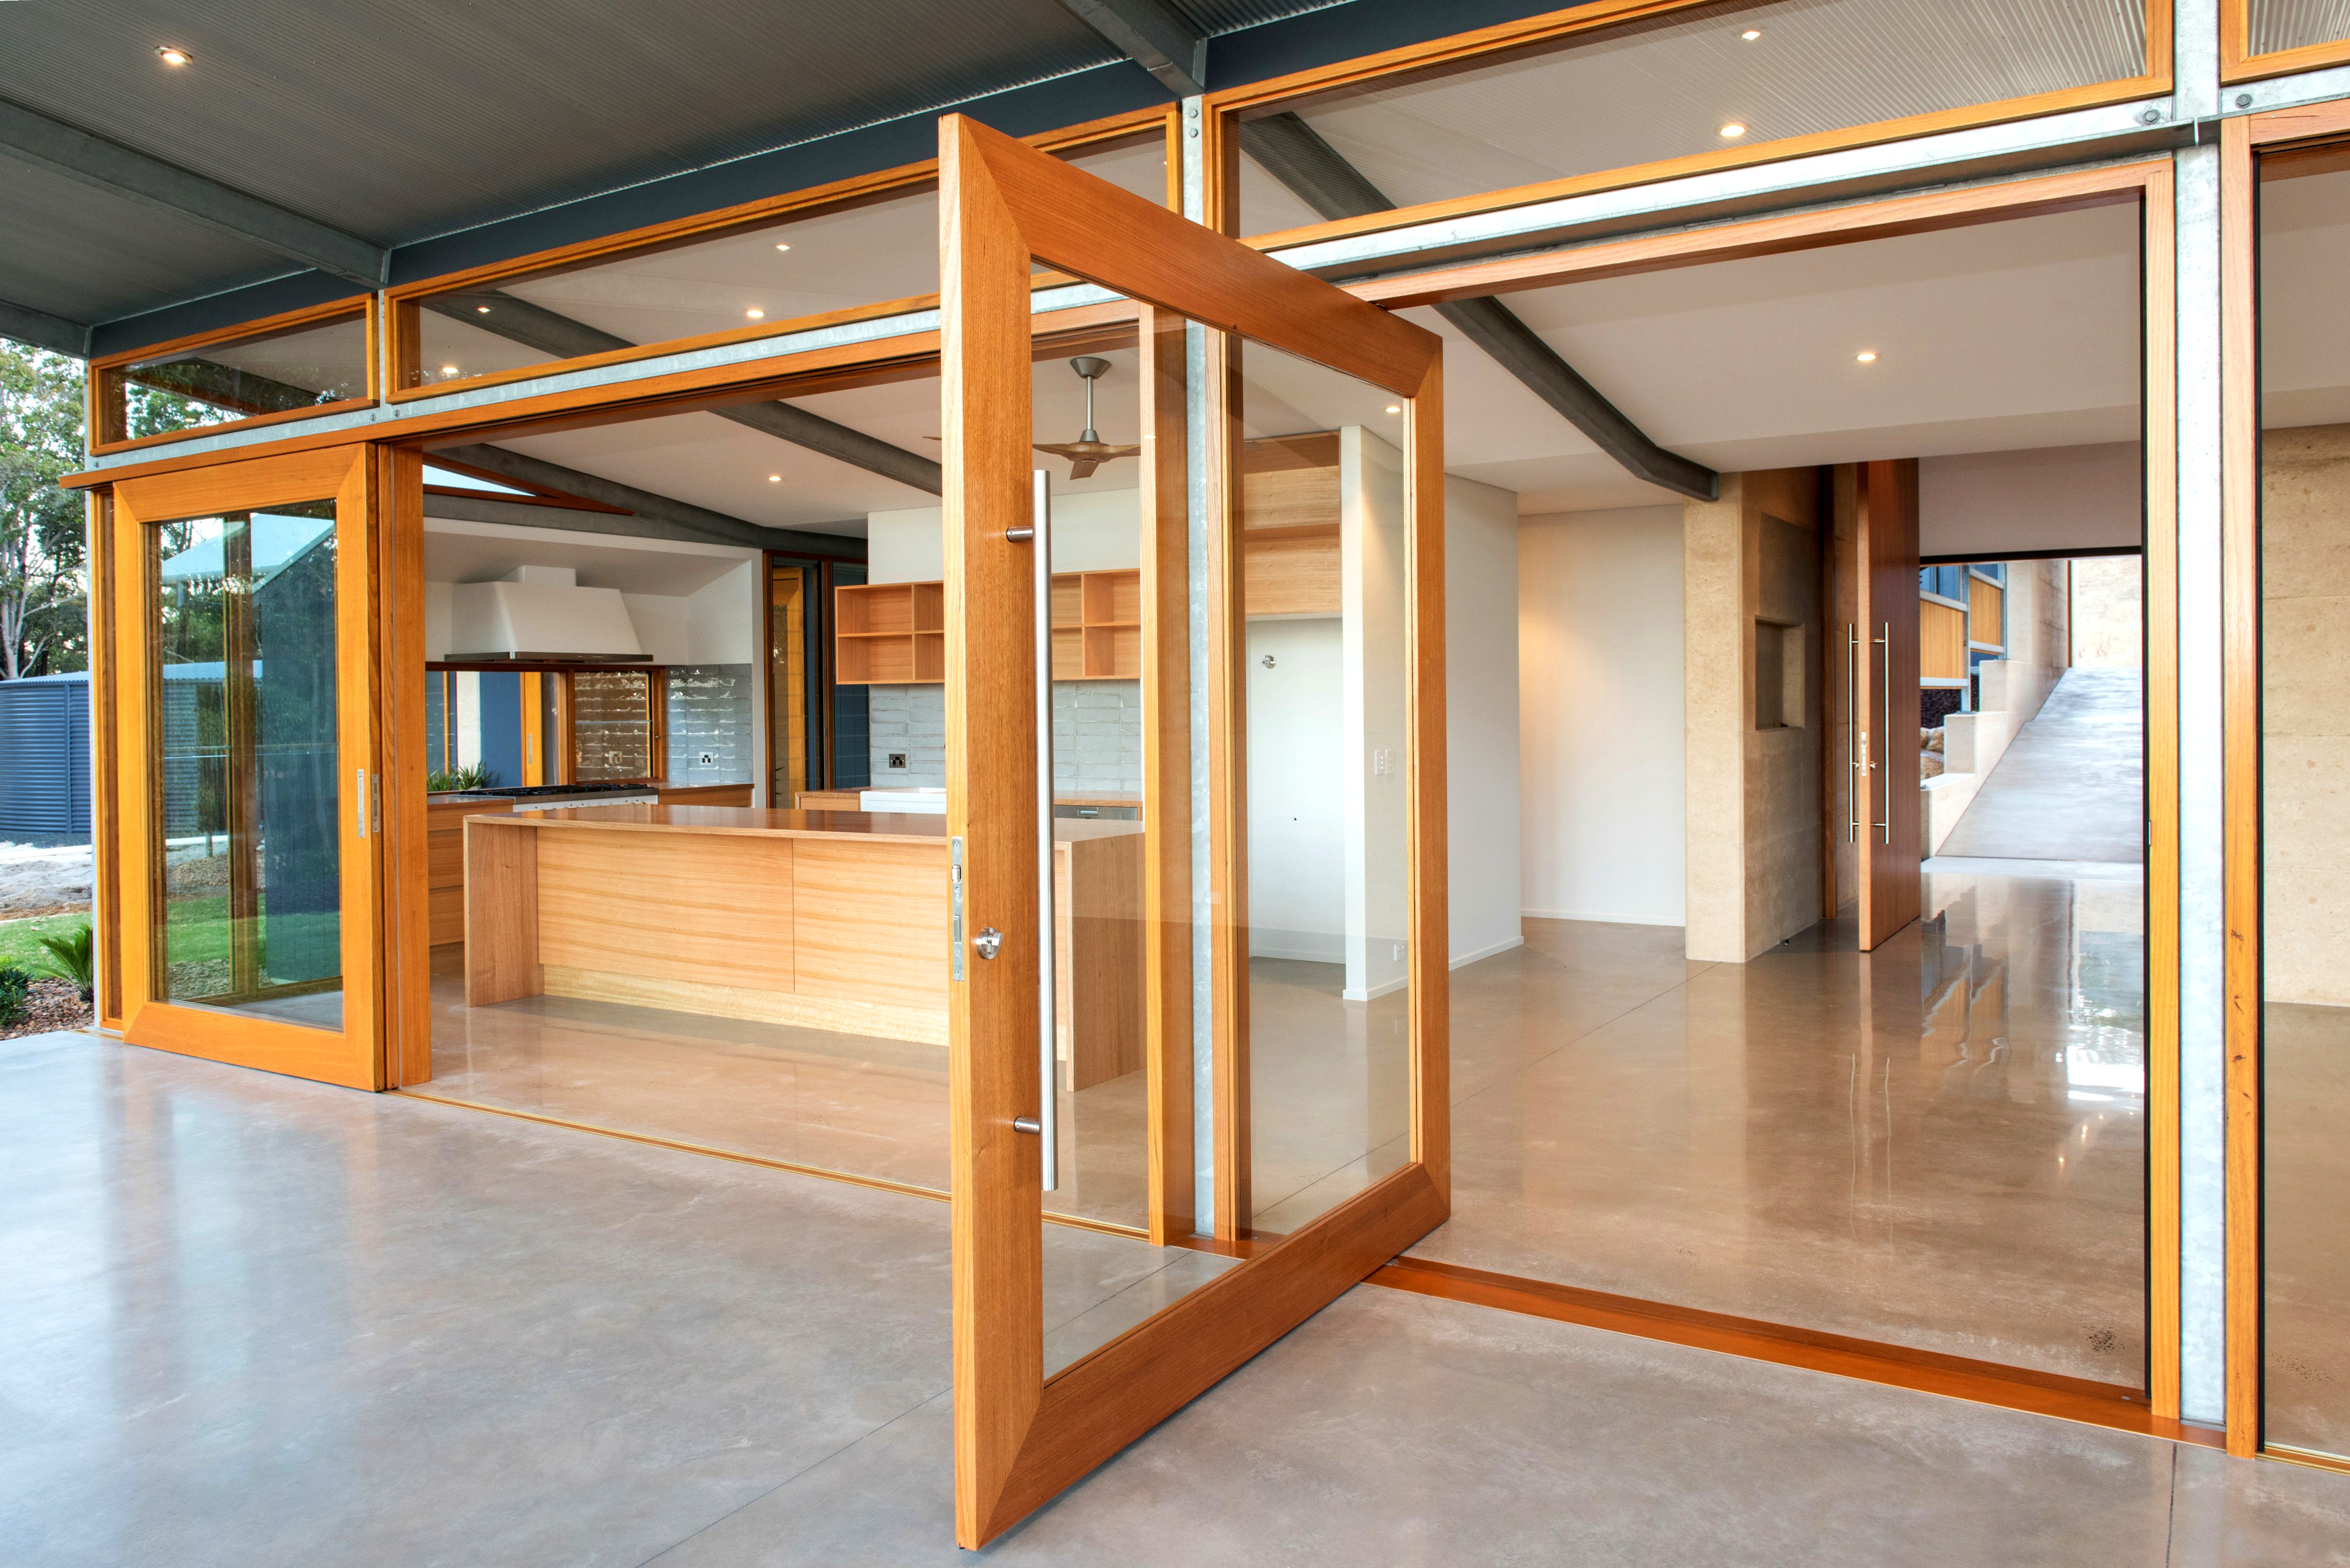 Cedar doors with seamless transition